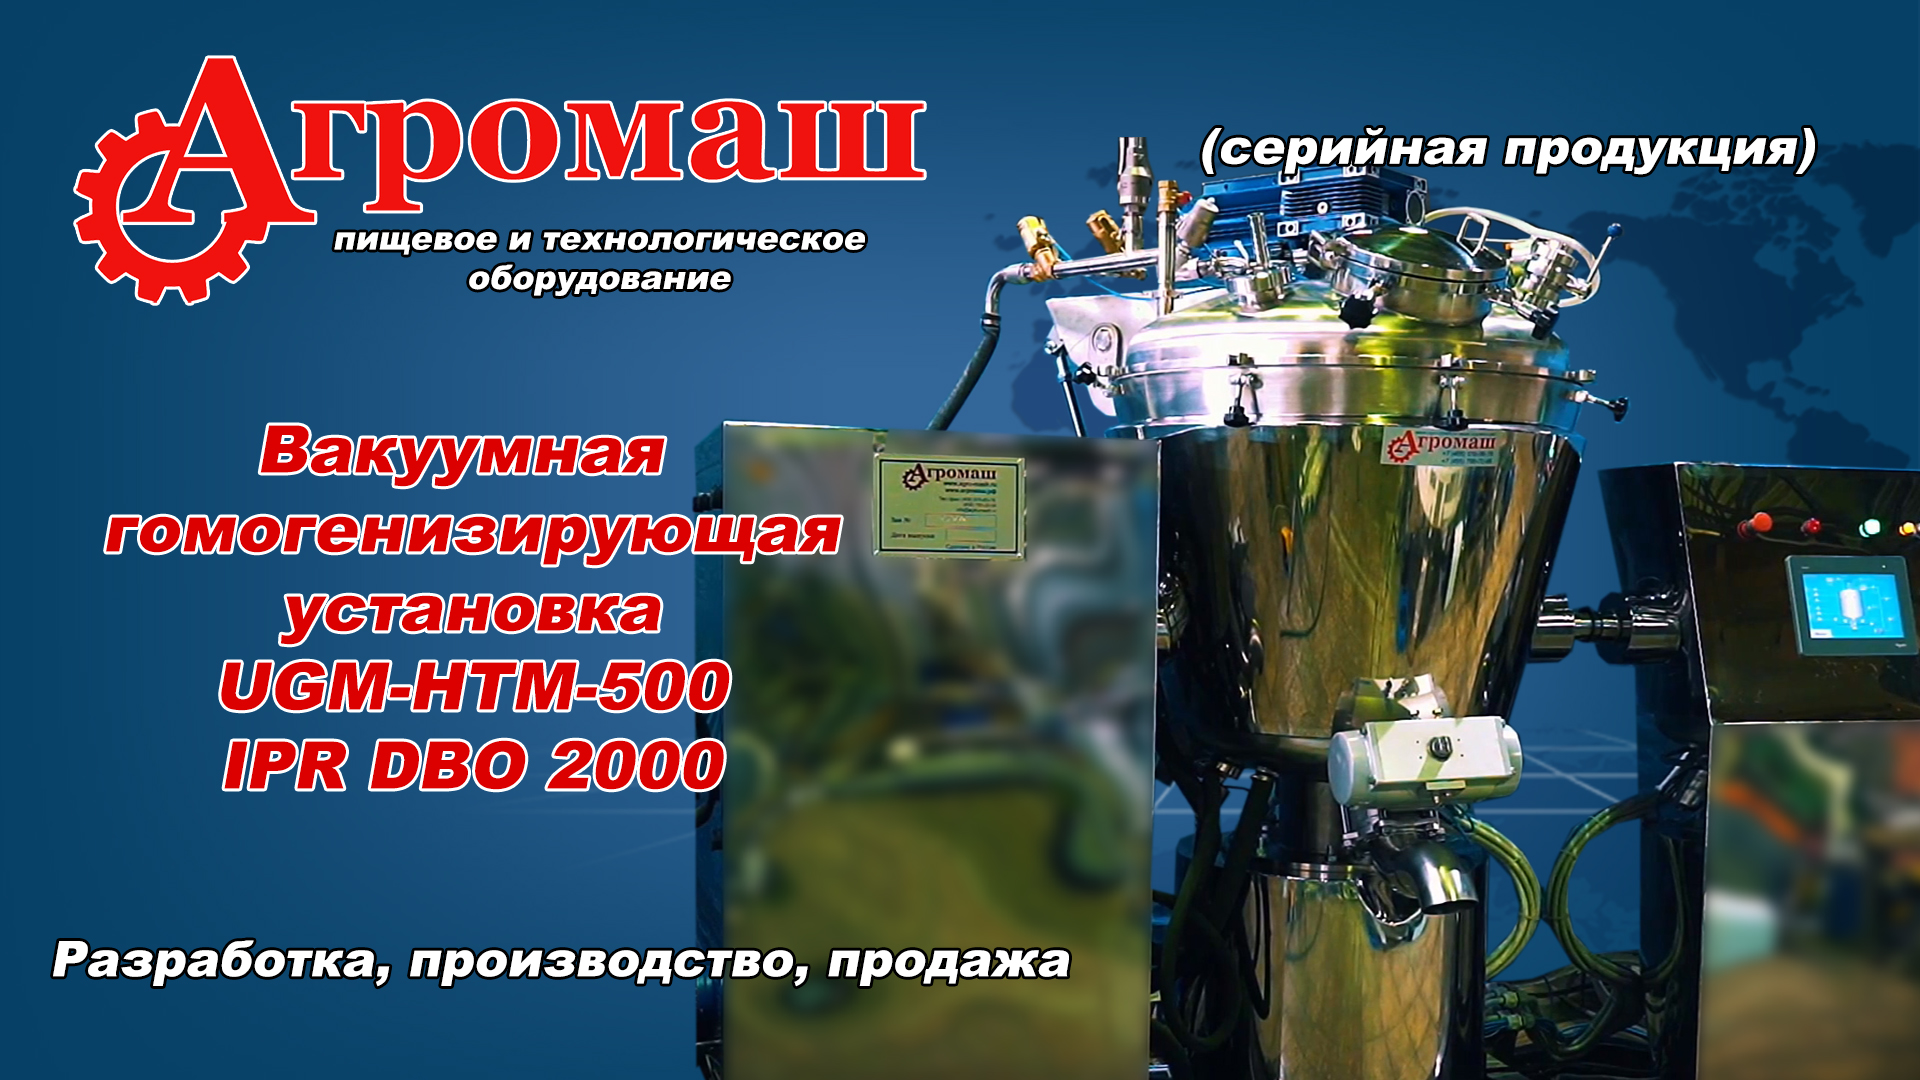 Вакуумная гомогенизирующая установка UGM-HTM-500 IPR GBO 2000